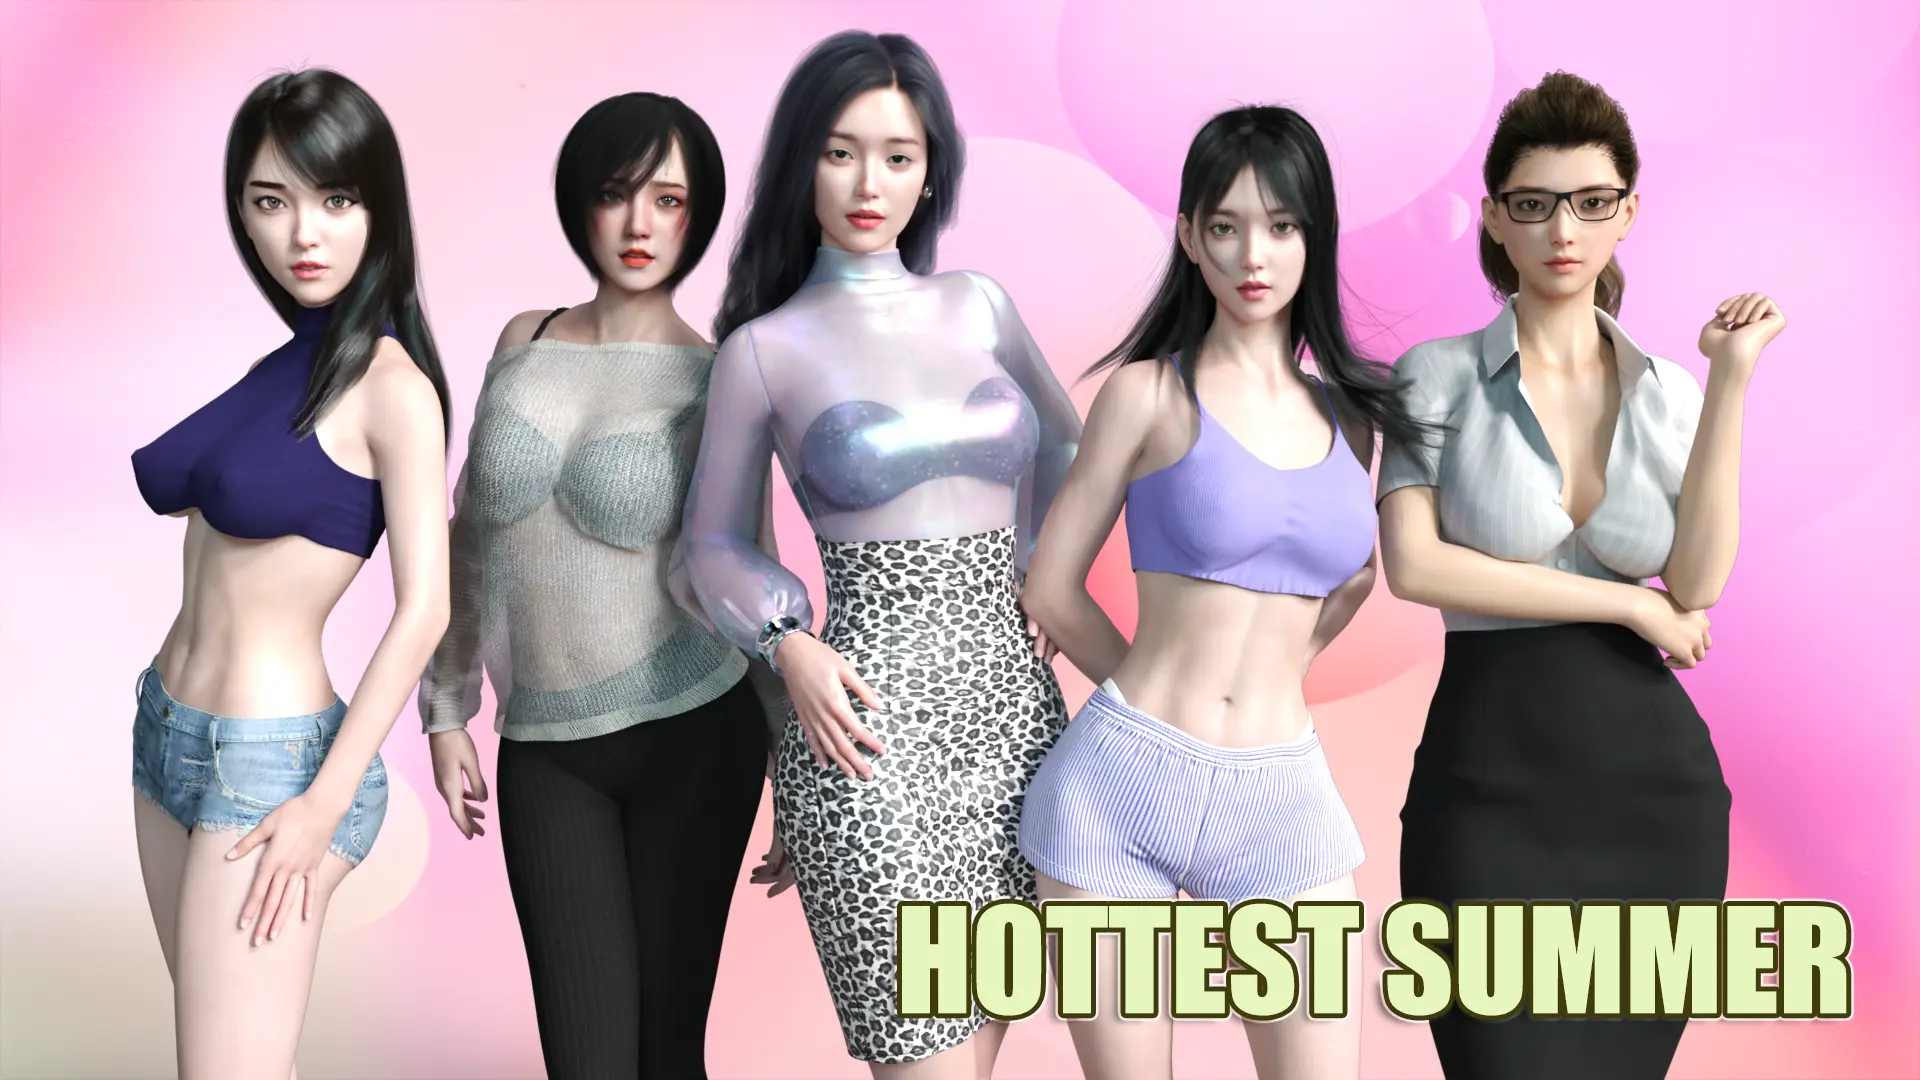 Hottest Summer main image